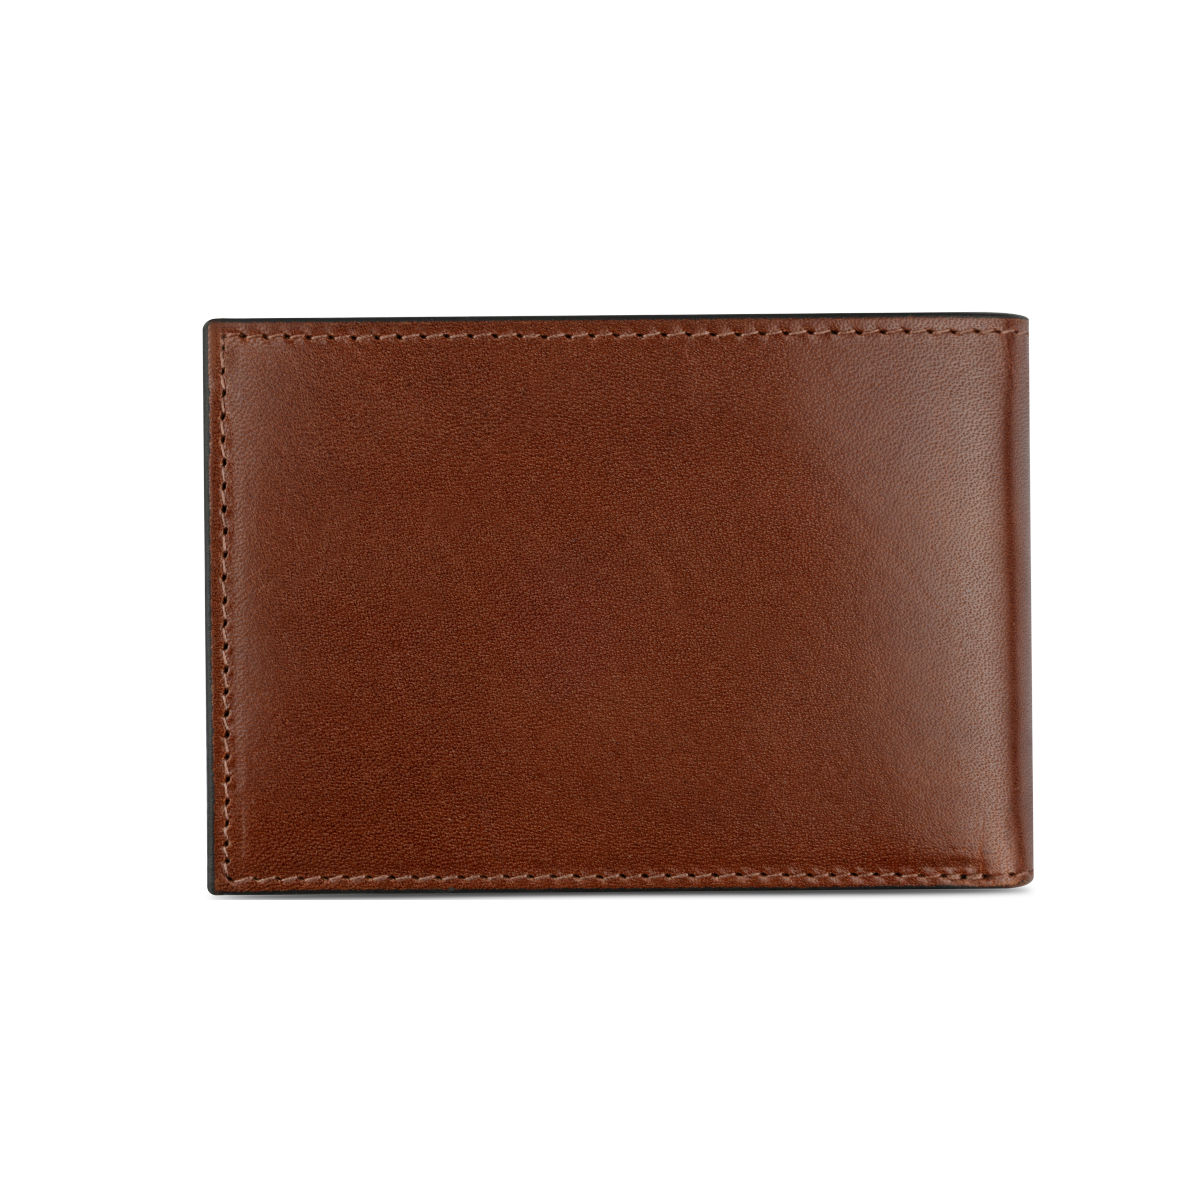 Bugatti men's leather wallet - cognac brown